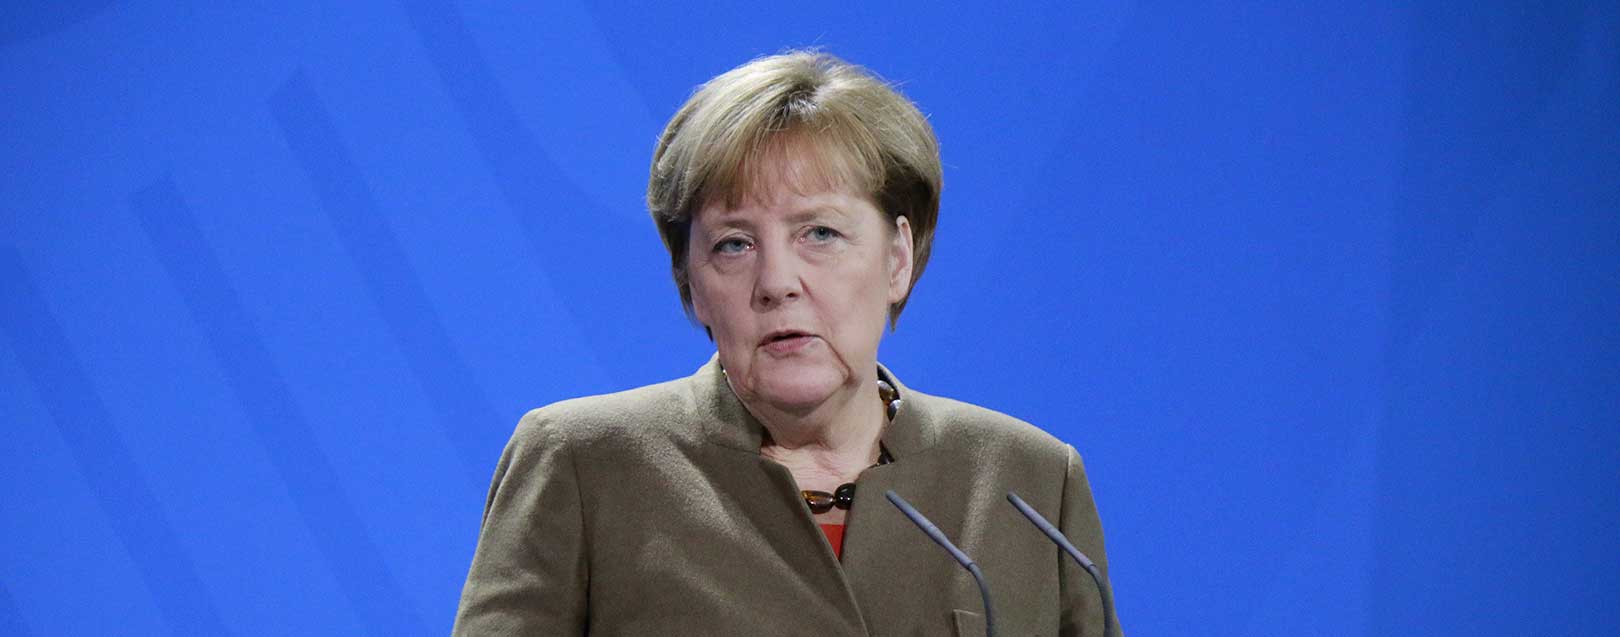 Merkel to skip World Economic Forum in Davos this year